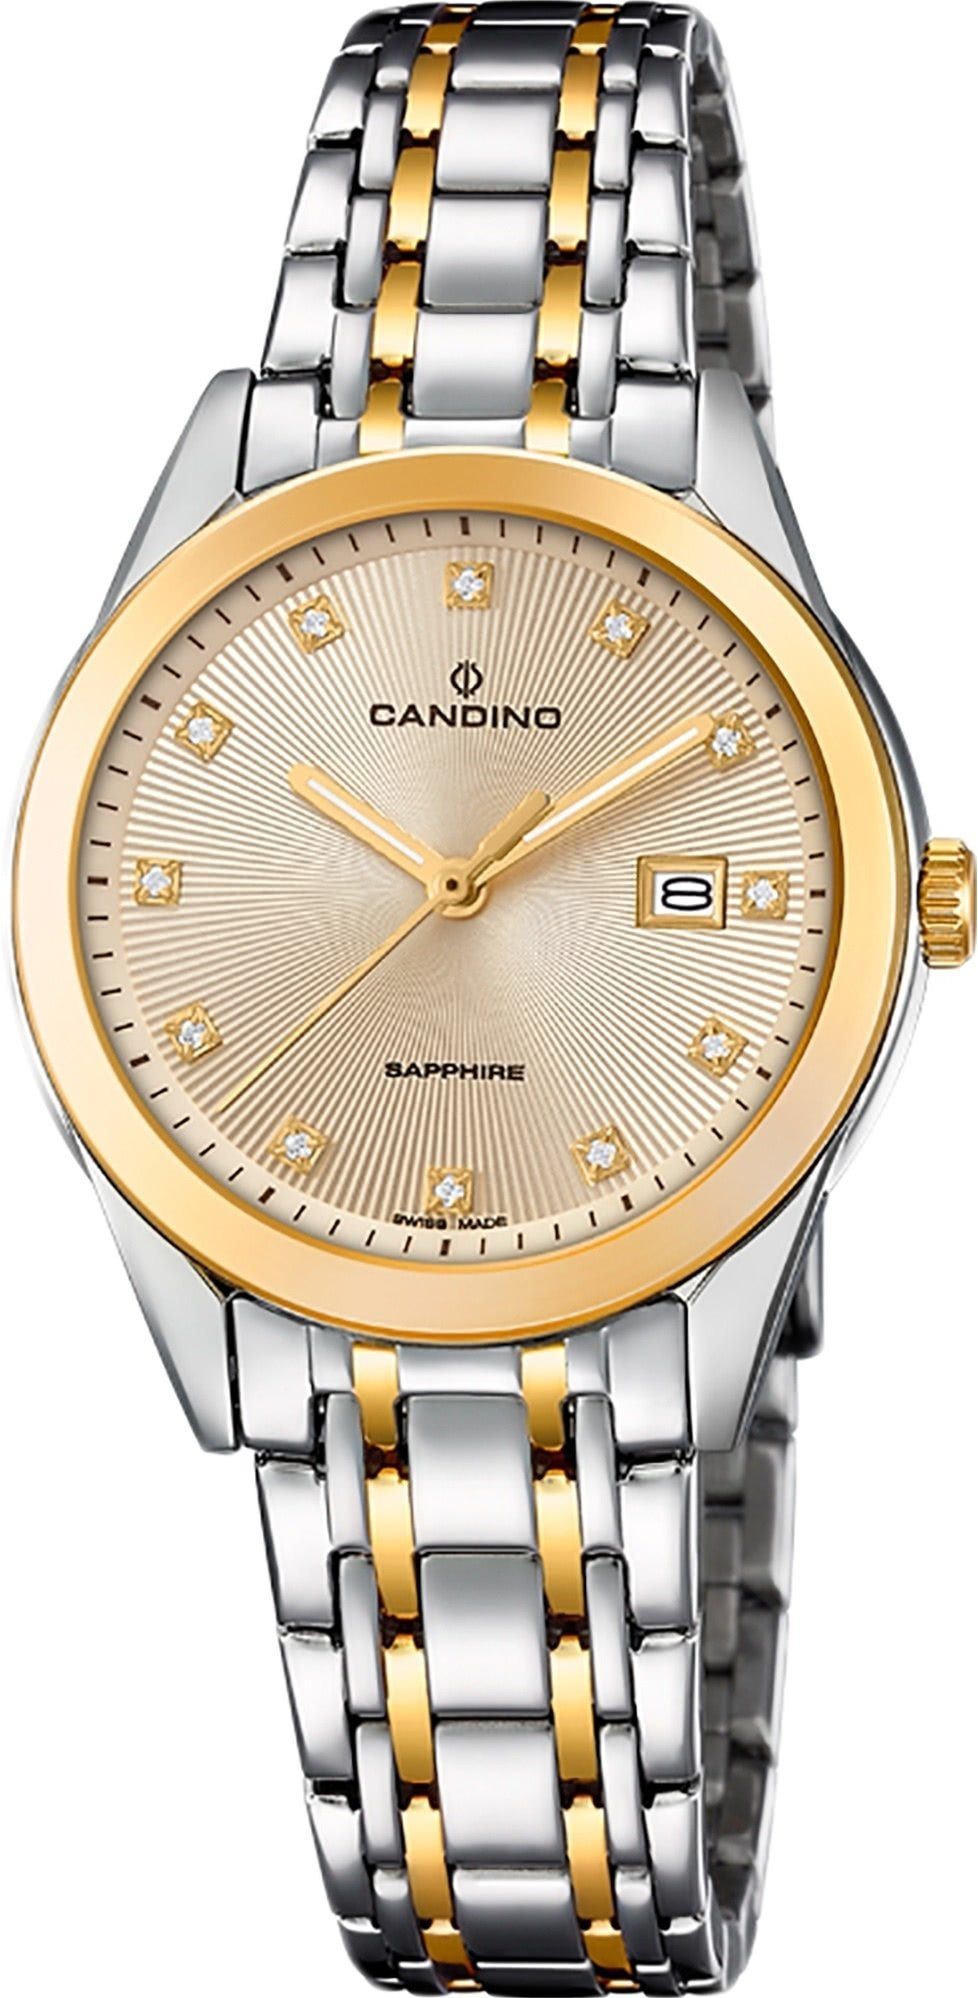 Uhr Damen C4695/2, Analog Candino silber, Damen Armbanduhr Elegant gold, Candino Quarzuhr rund, Edelstahlarmband